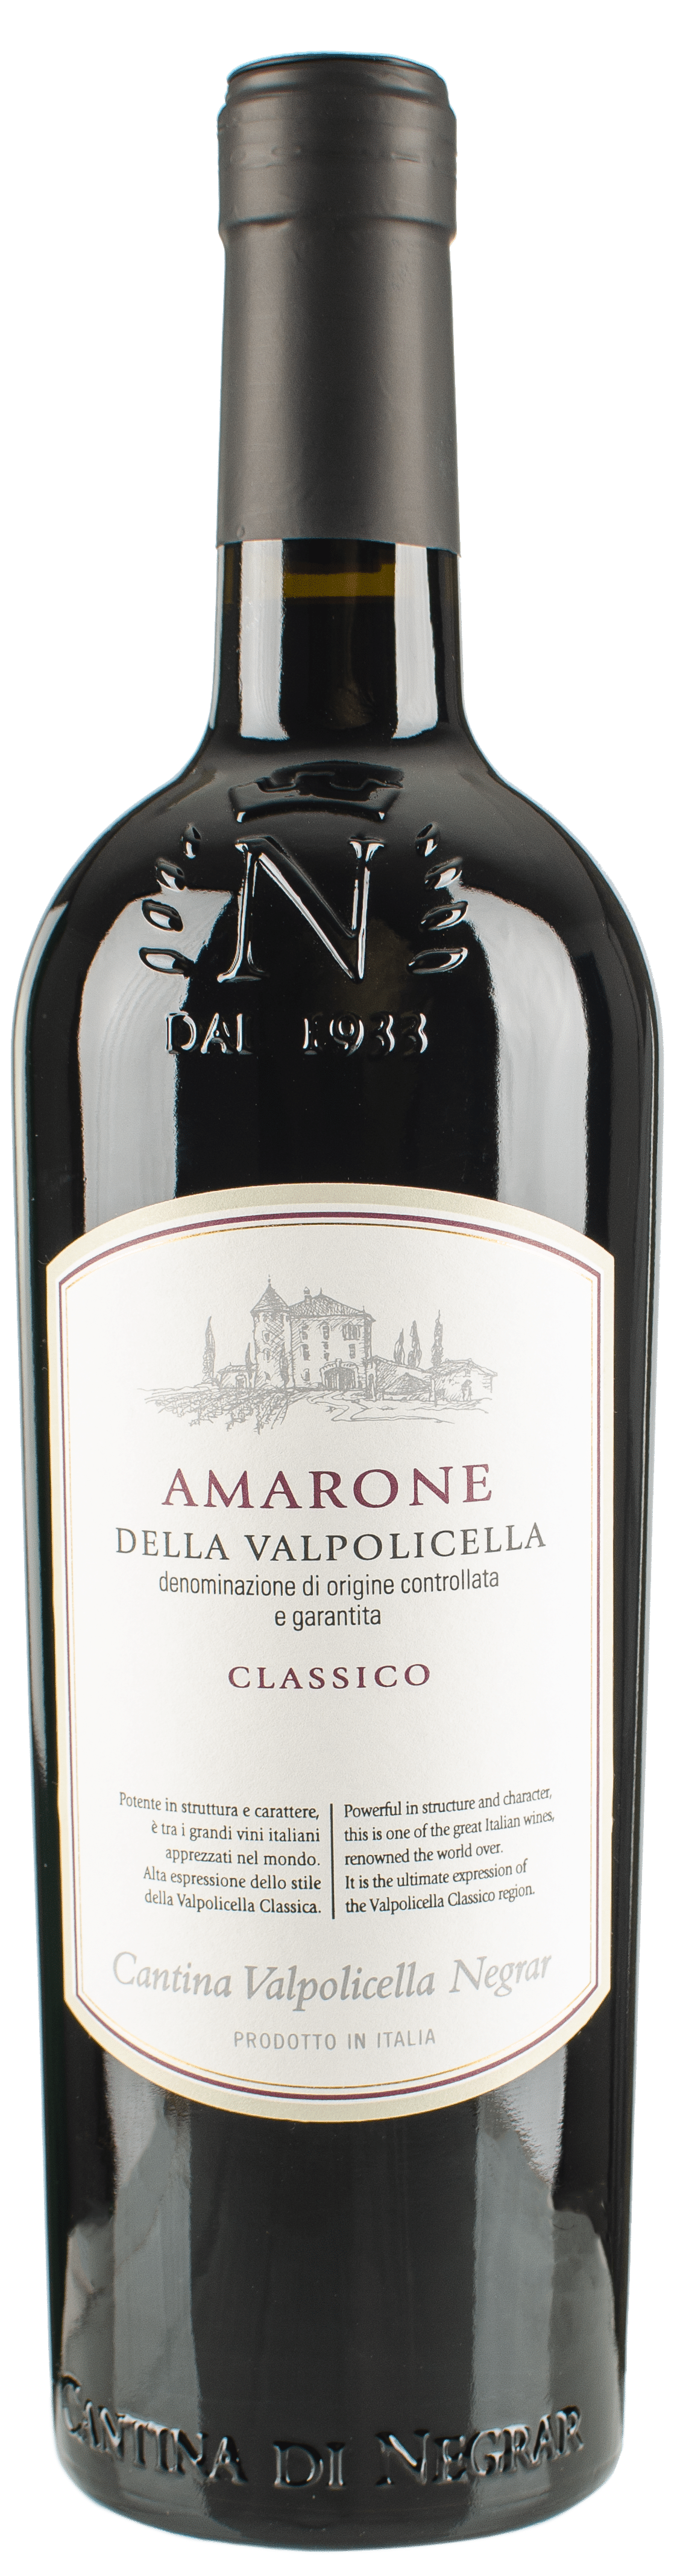 Brønshøj Valpolicella DOCG Superiore Cantina - - 2020 Valpolicella Amarone Vinhandel Classico Negrar della